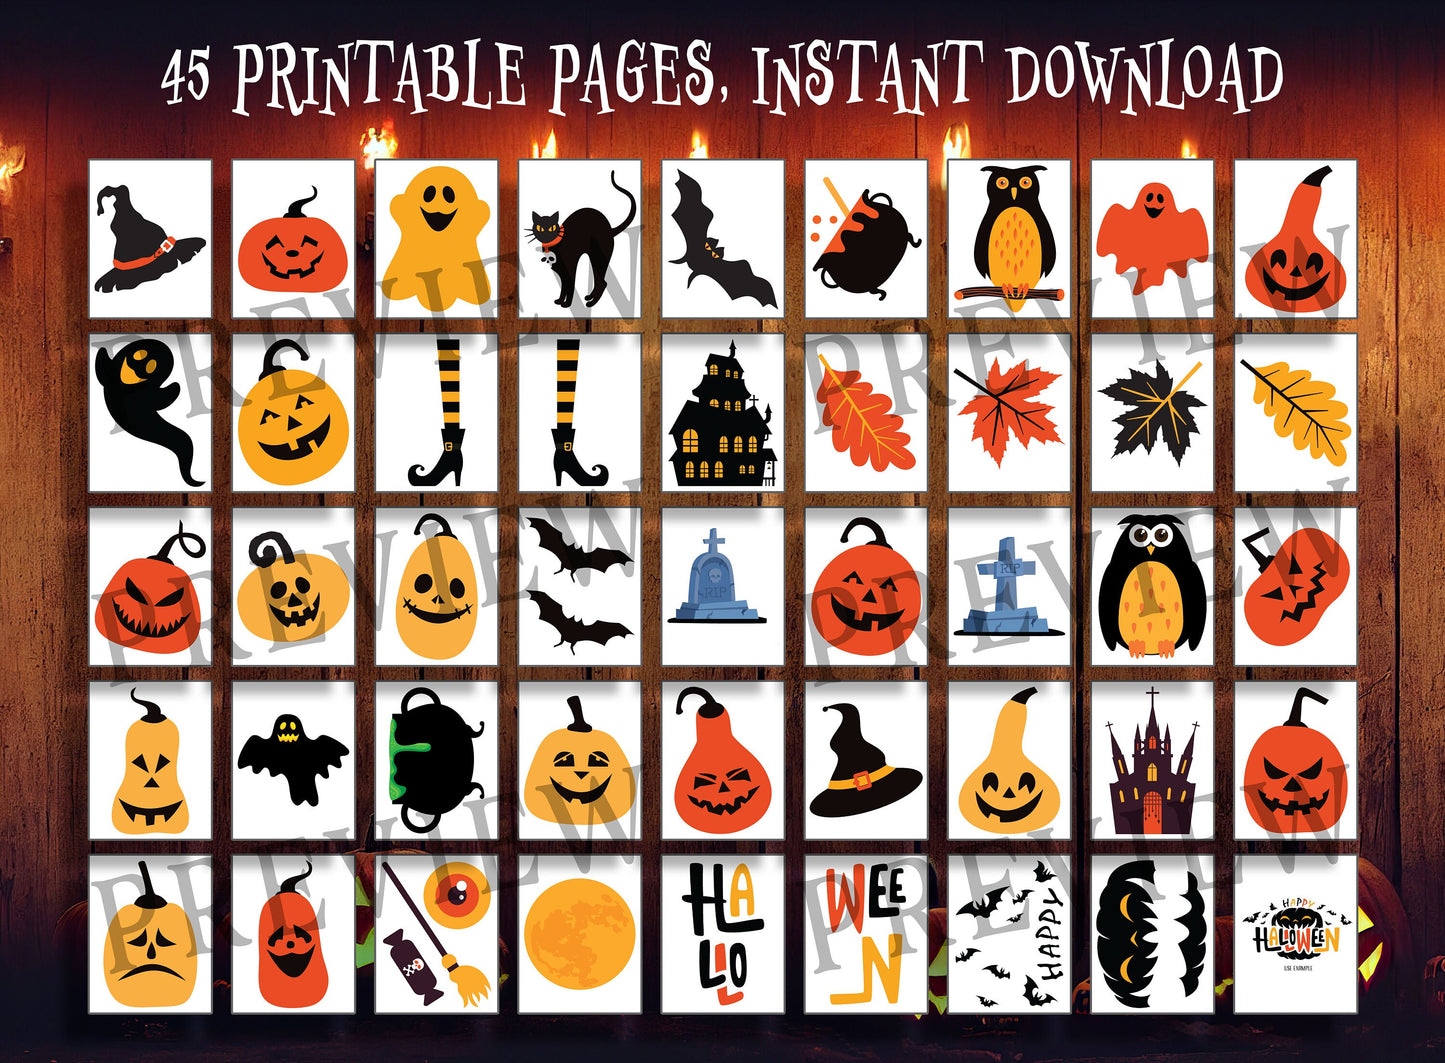 Spooktacular Halloween Craft: 45 High-Res Printable Hanging Decorations, PDF File, US Letter, Instant Download